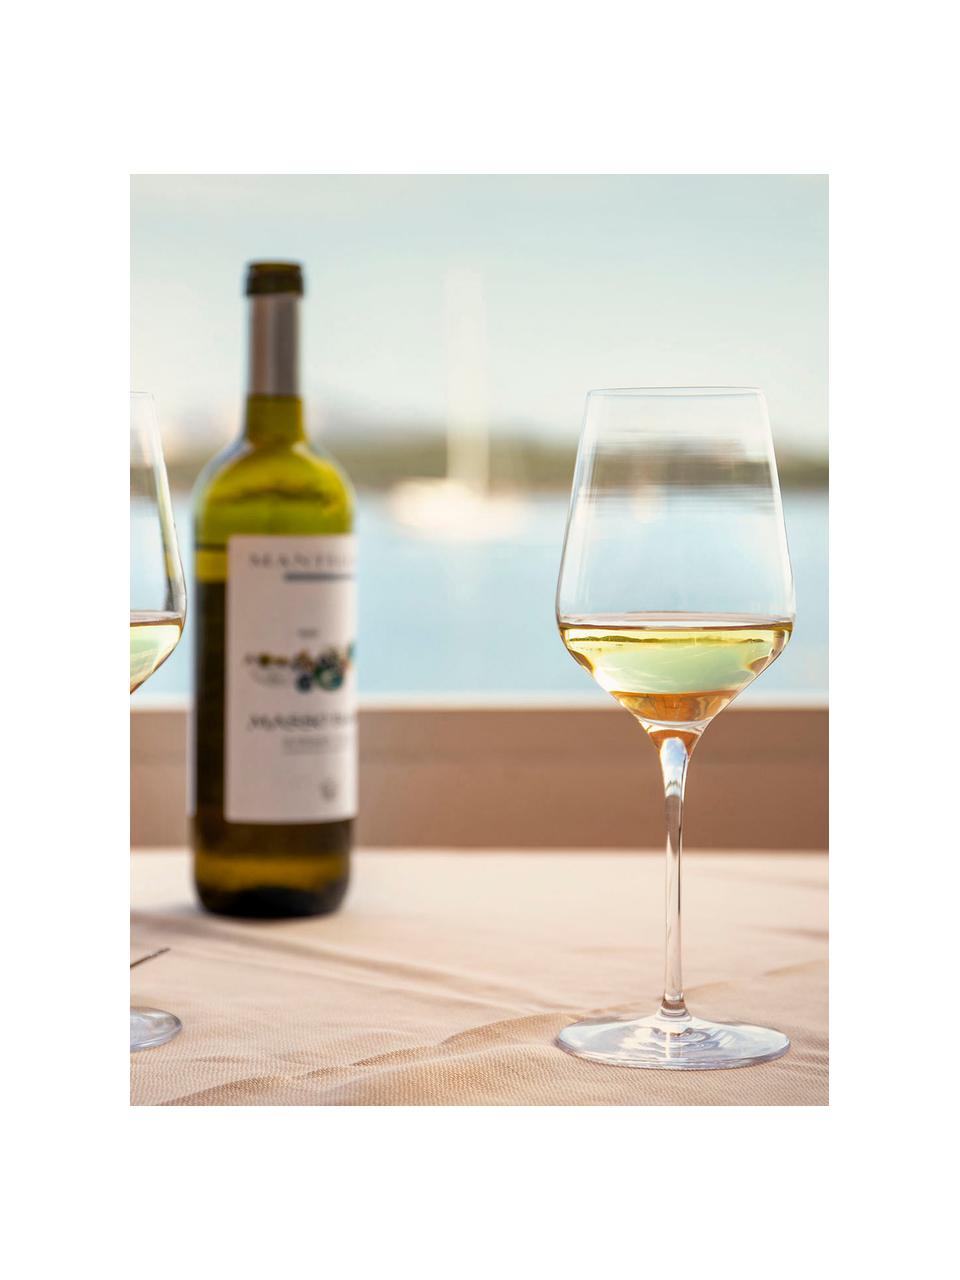 Copas de vino blanco de cristal Starlight, 6 uds., Cristal, Transparente, Ø 9 x Al 23 cm, 410 ml